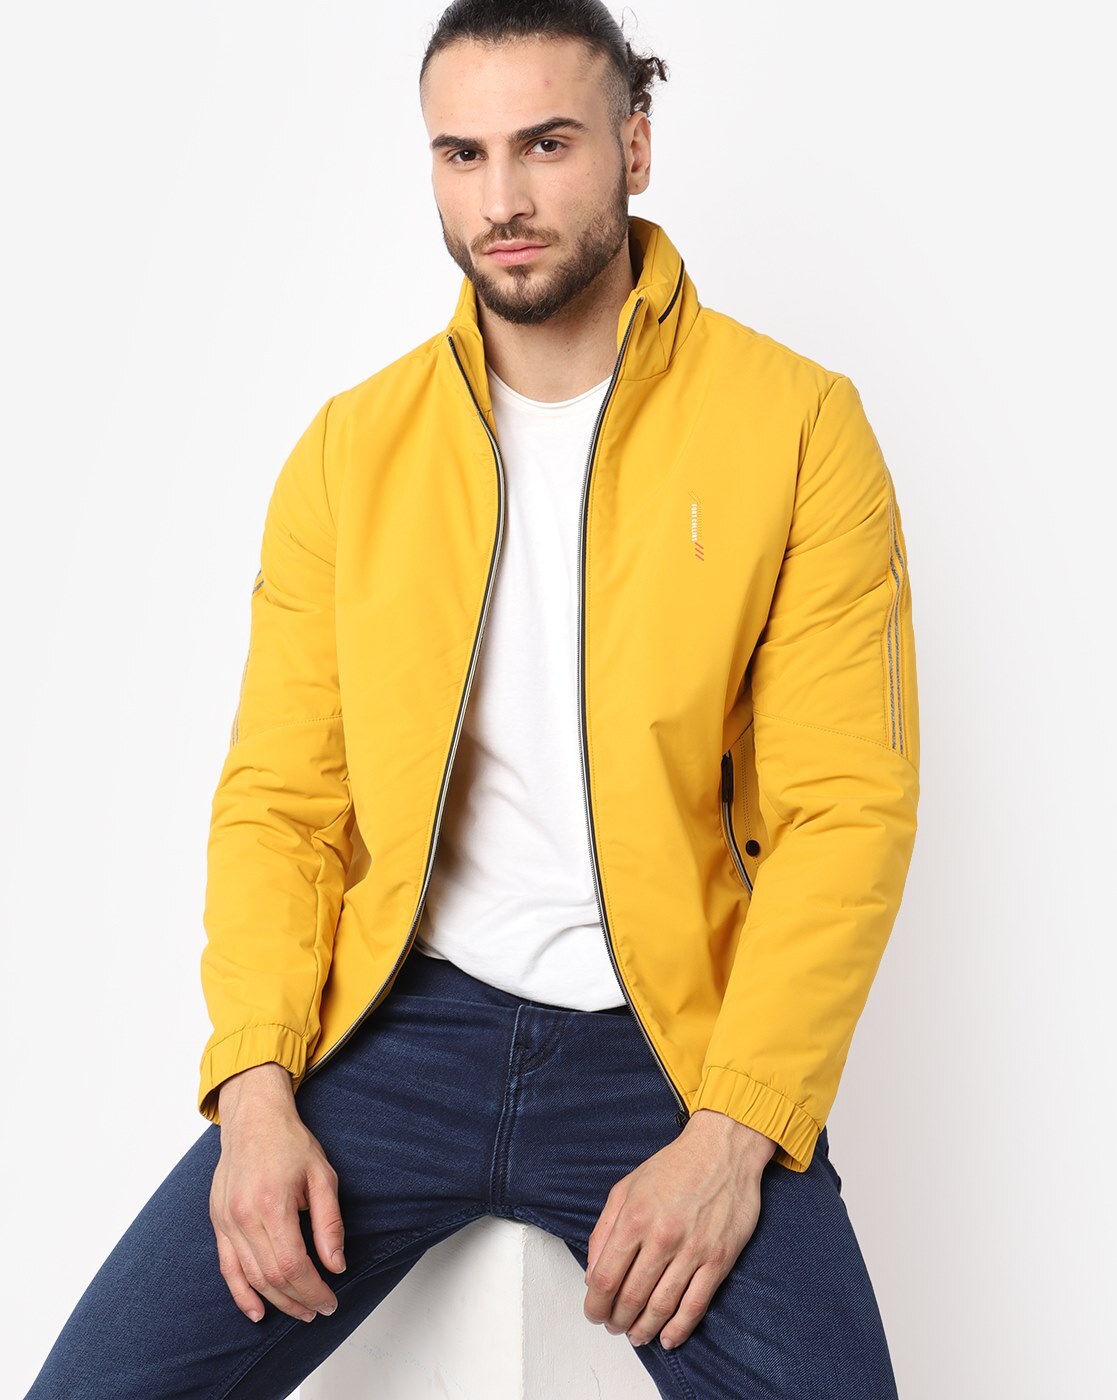 Nylon hooded jacket - Dark yellow - Men | H&M IN-anthinhphatland.vn